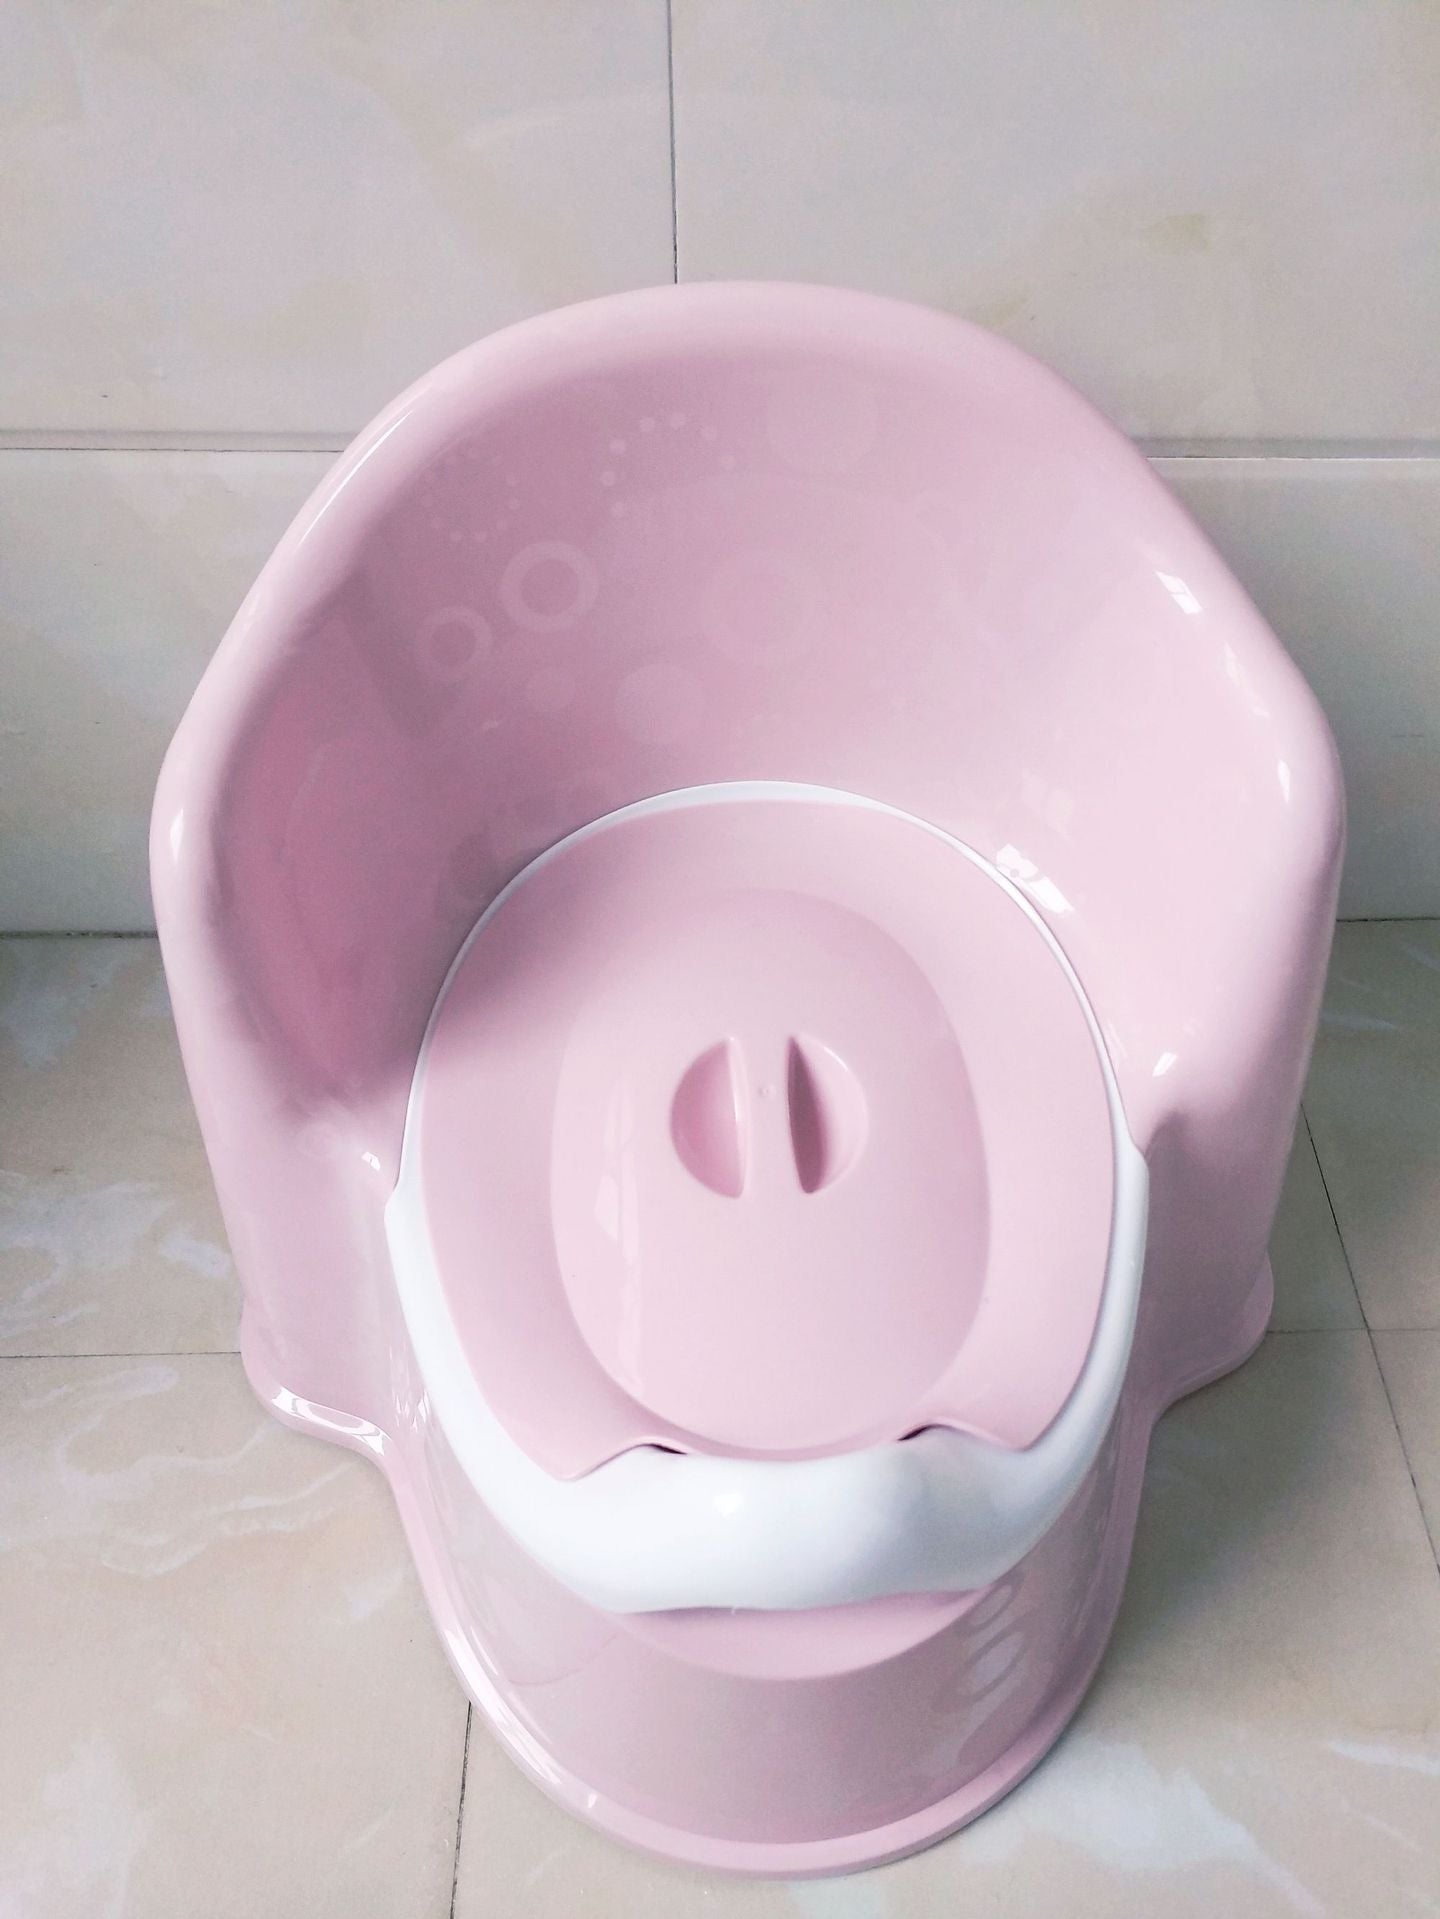 Cheap baby potty toilet